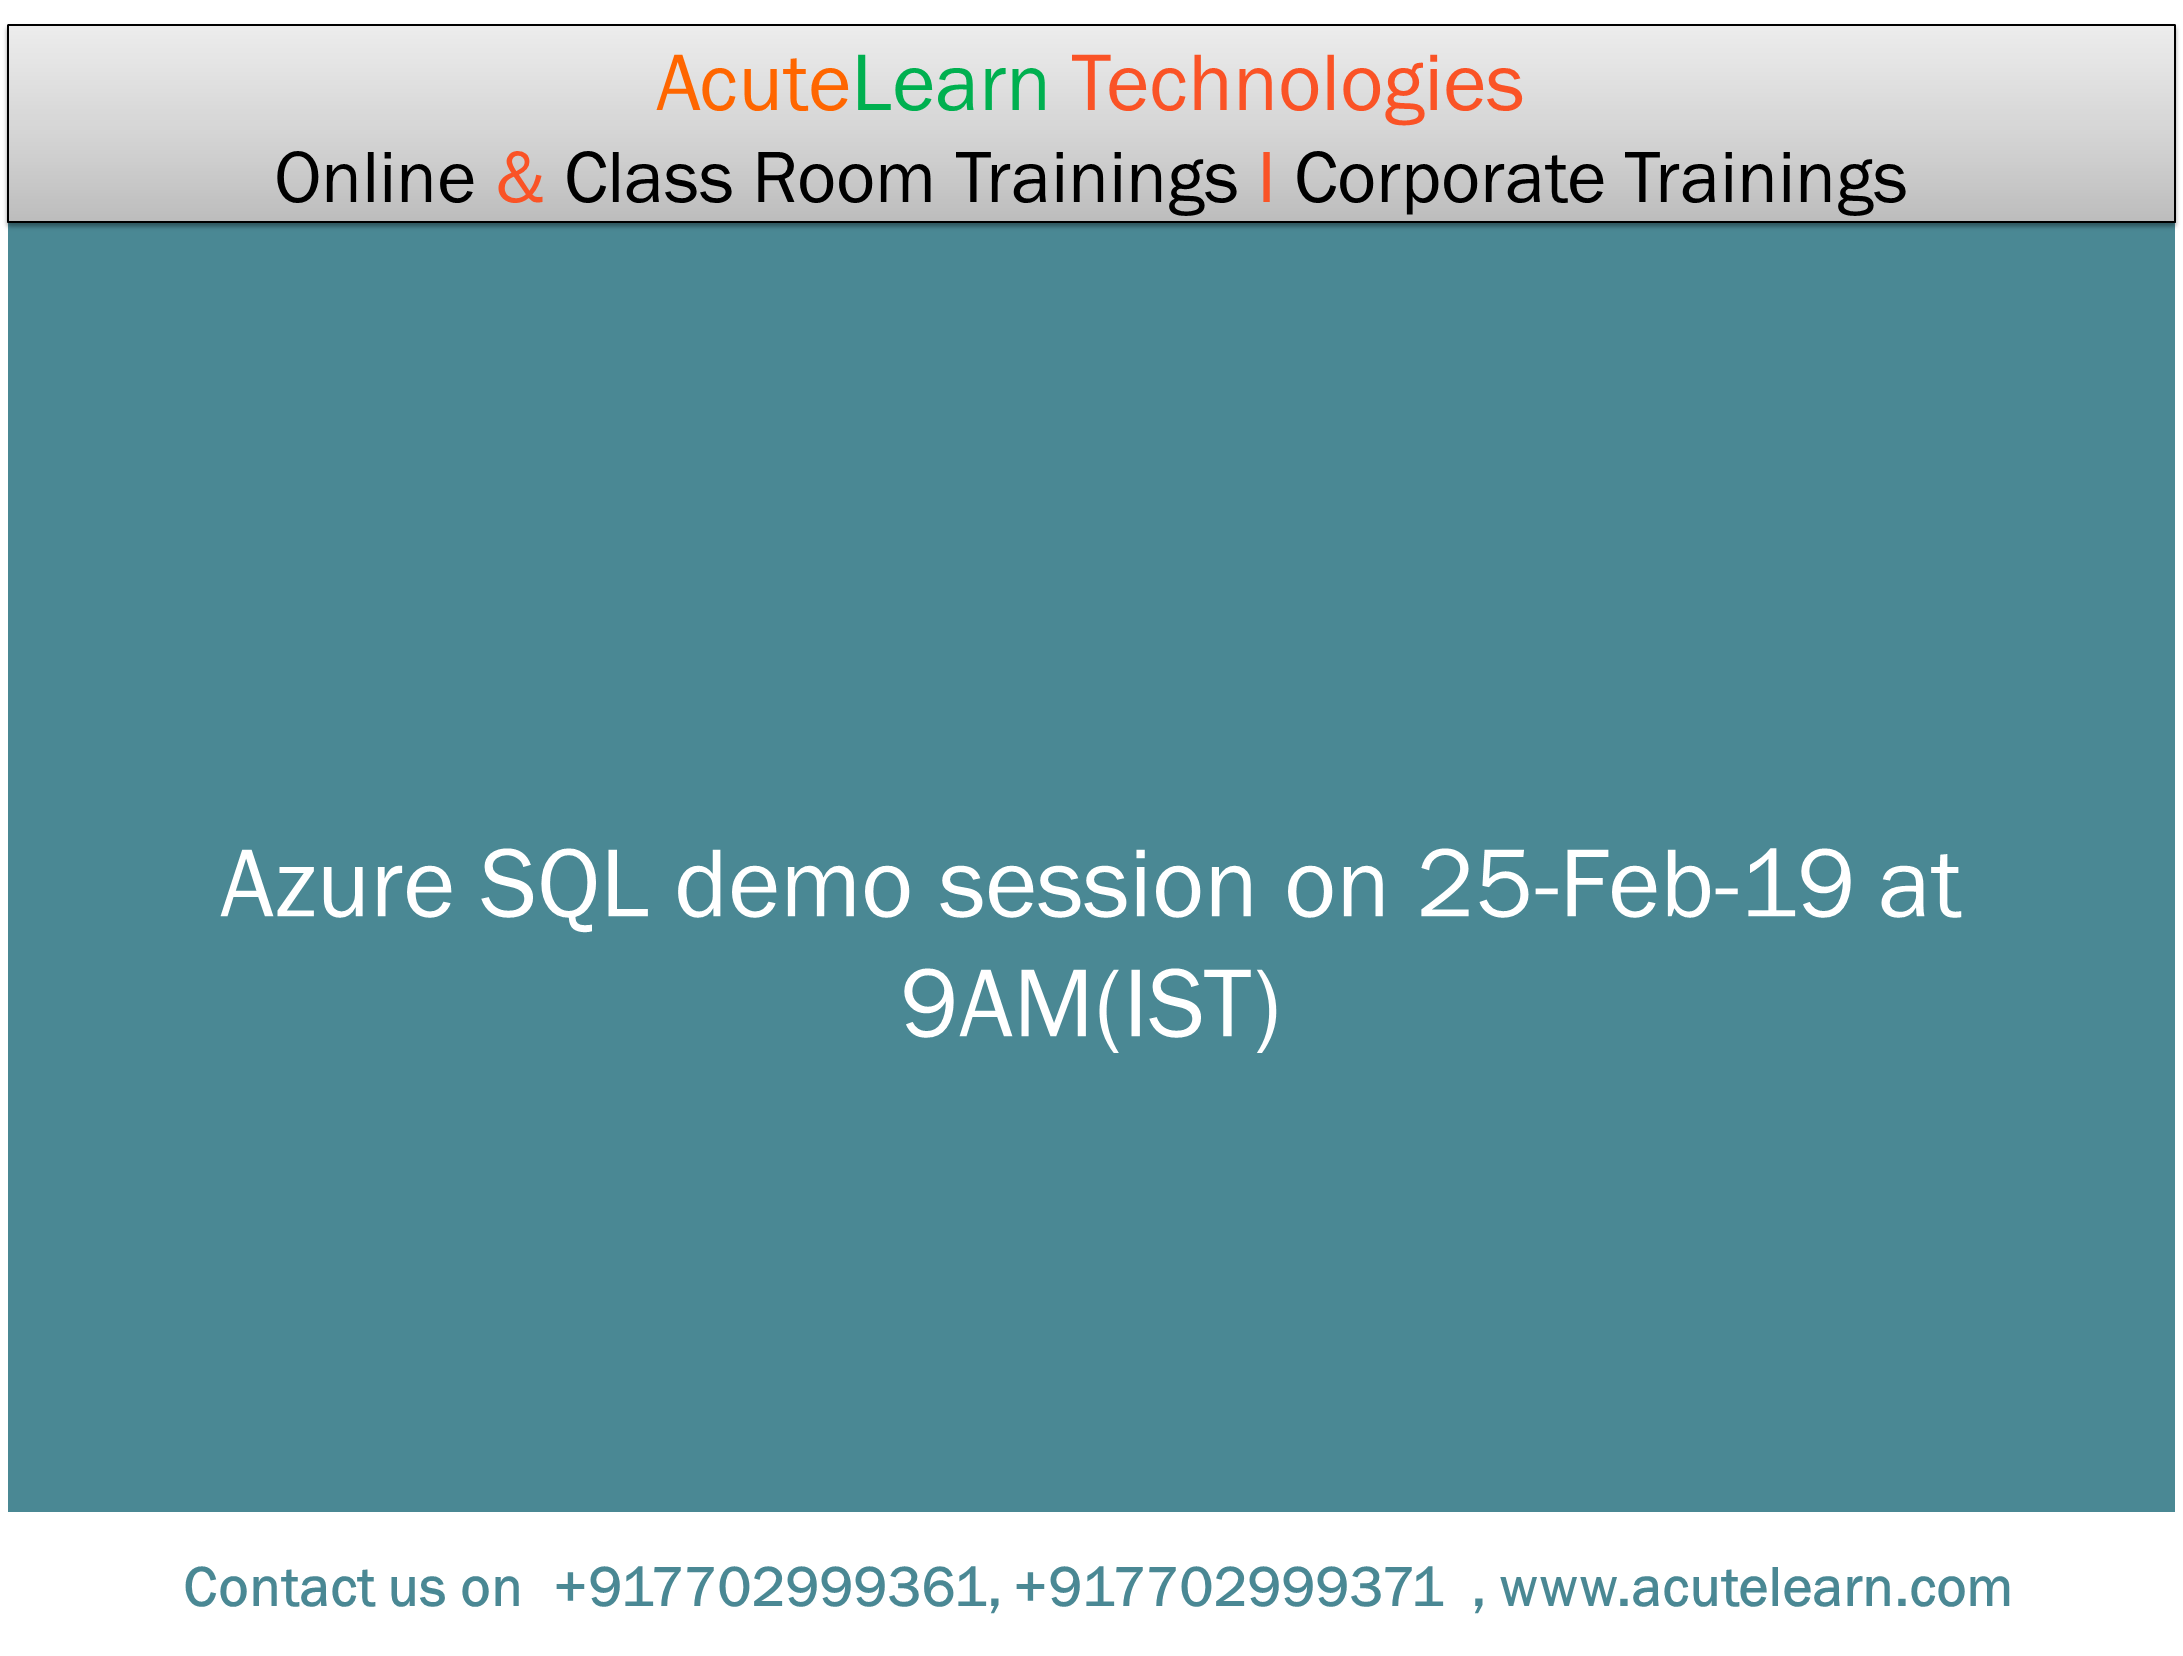 Azure SQL demo session on 25-Feb-19 i.e. Monday at 9AM(IST)--Acutelearn Technologies., Hyderabad, Telangana, India